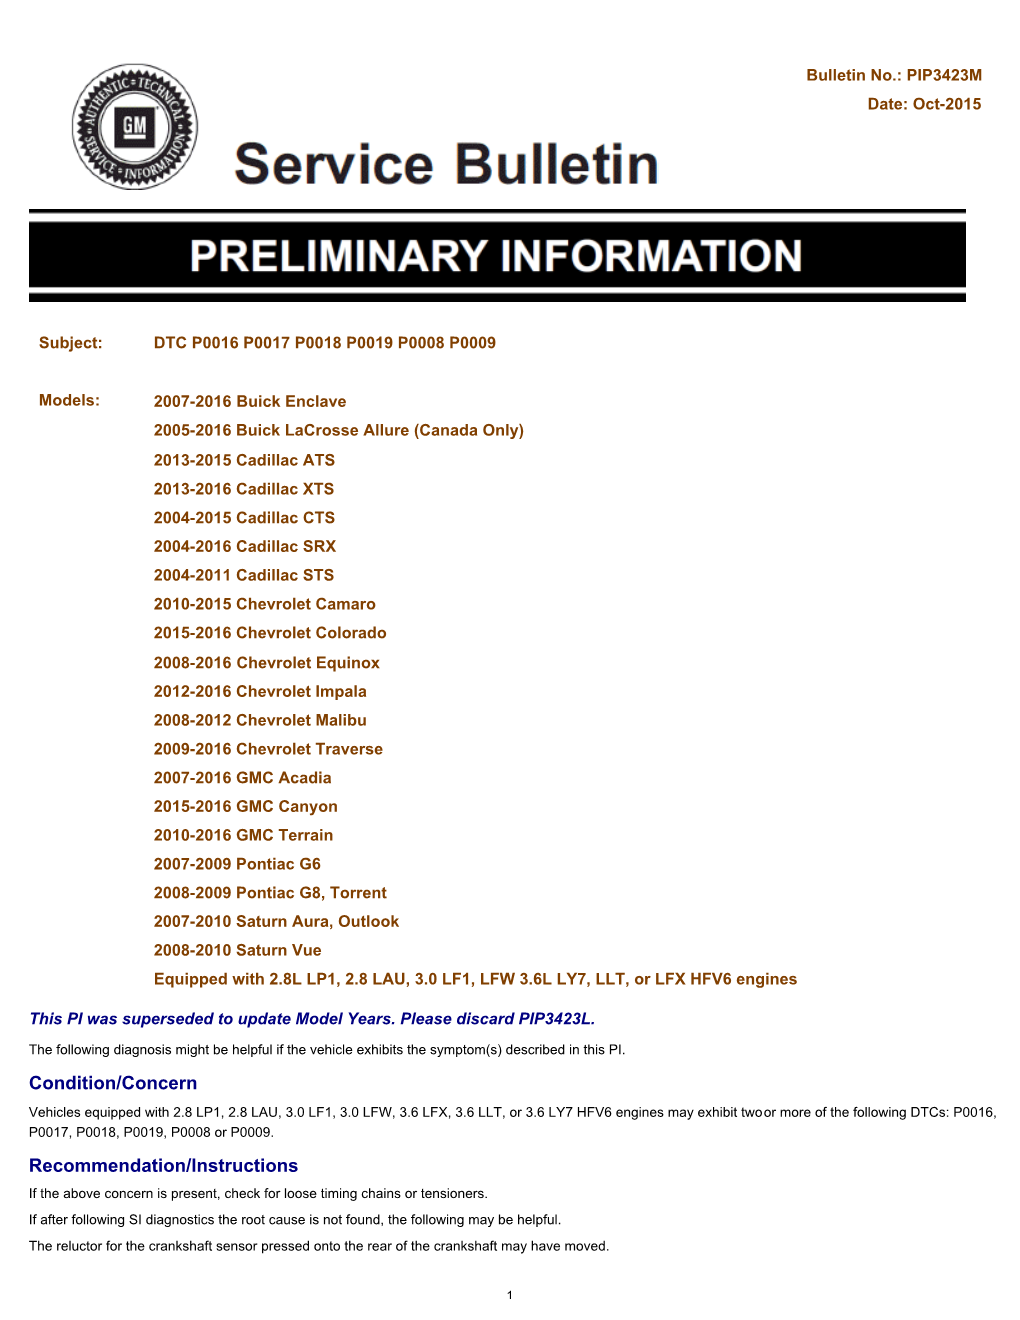 Bulletin No.: PIP3423M Date: Oct-2015